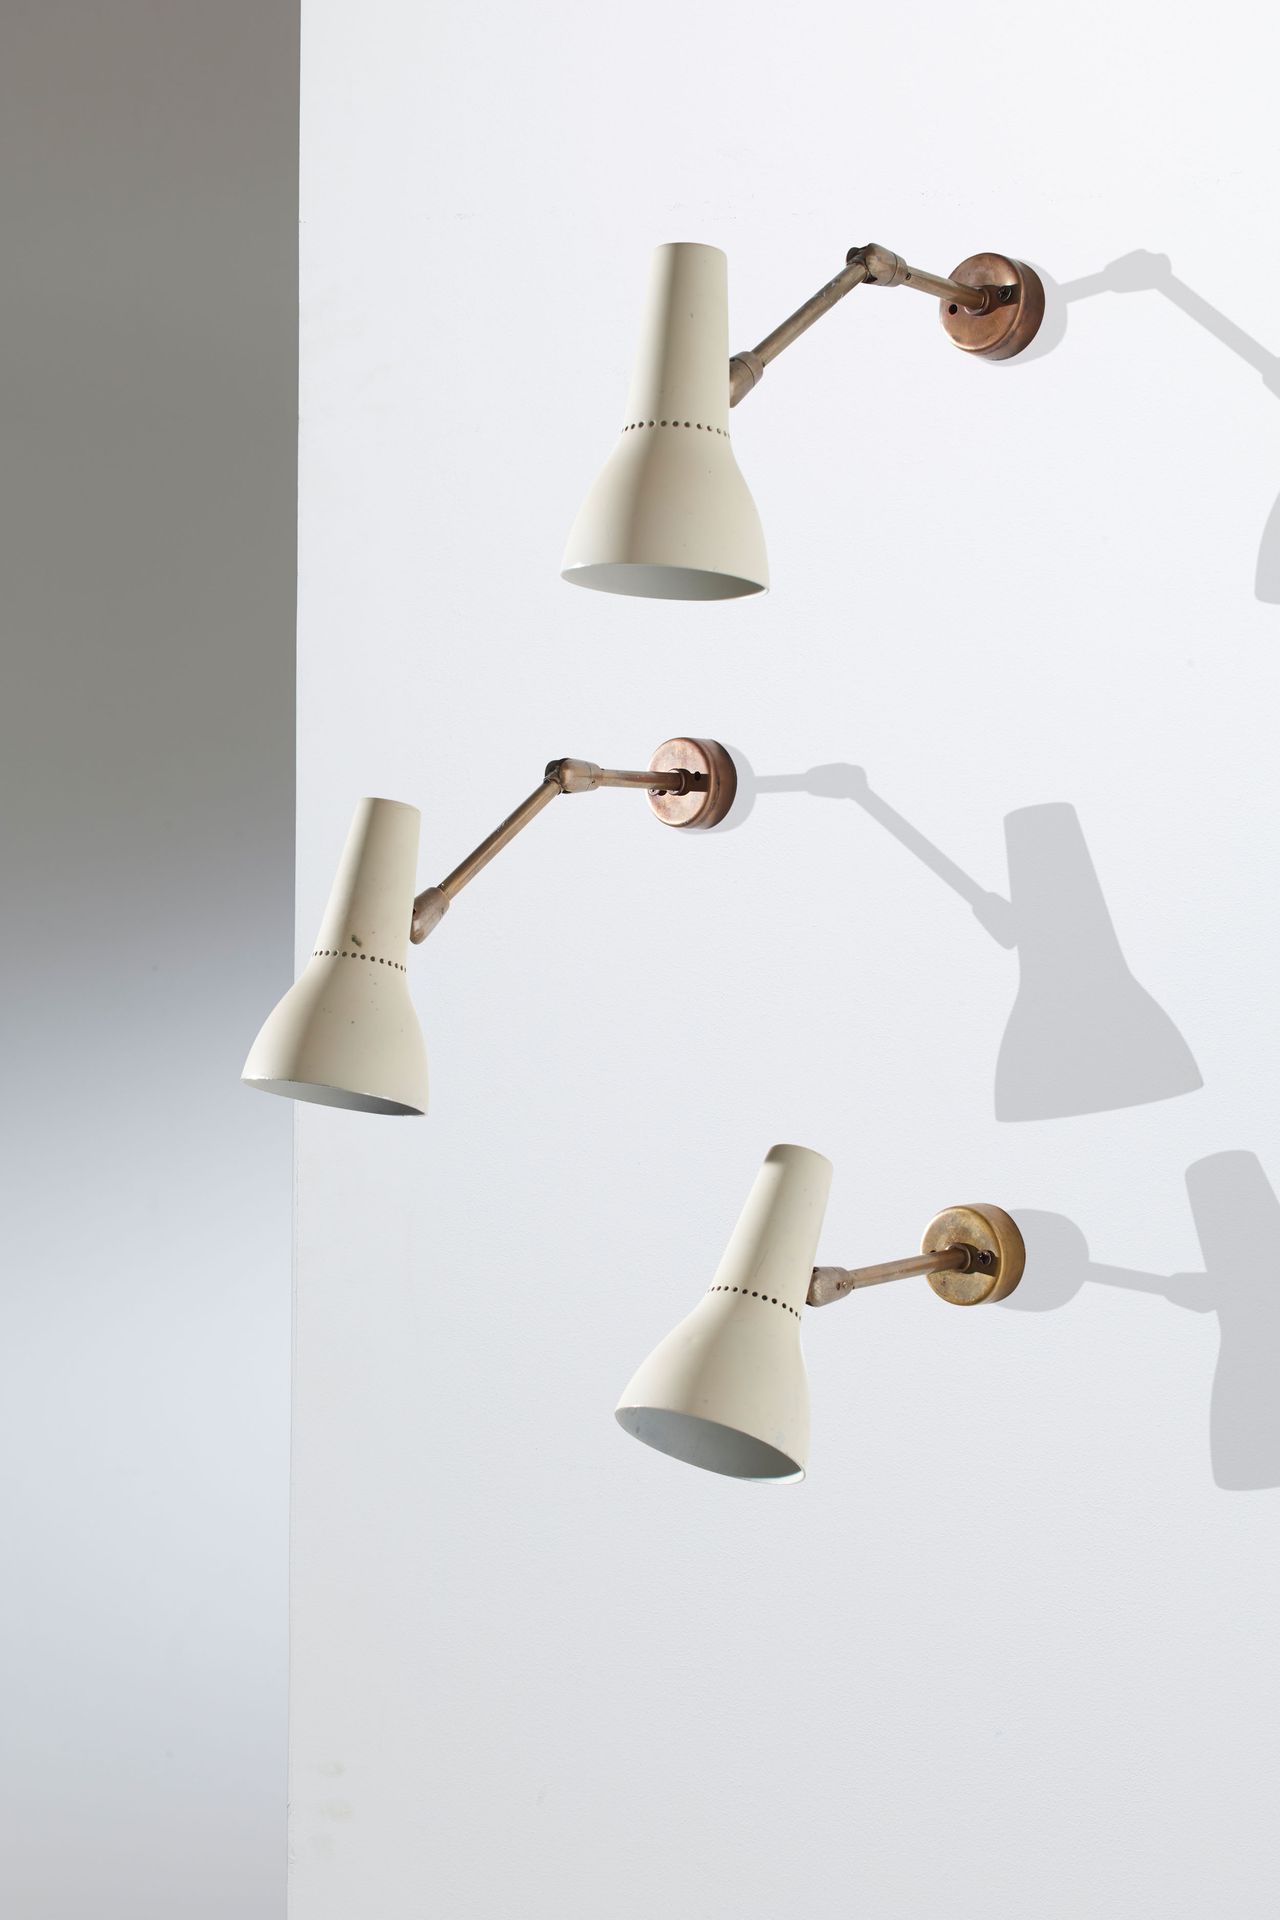 GIUSEPPE OSTUNI Three wall lamps. Brass, painted aluminum. Oluce production 1950&hellip;